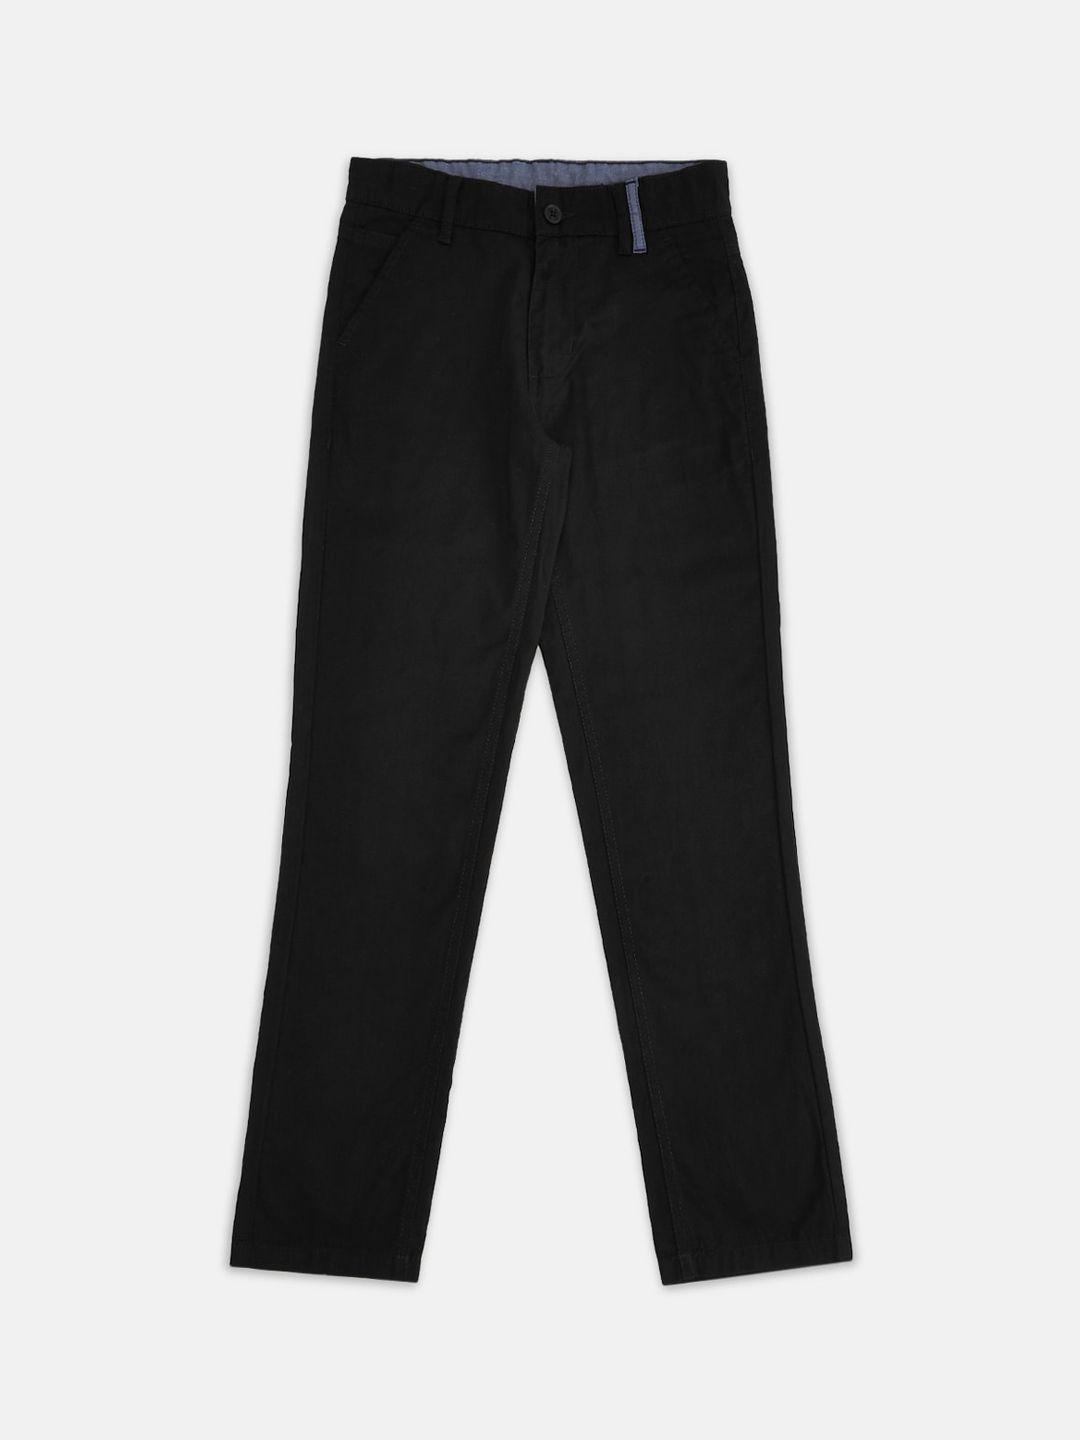 pantaloons junior boys black solid cotton chinos trouser